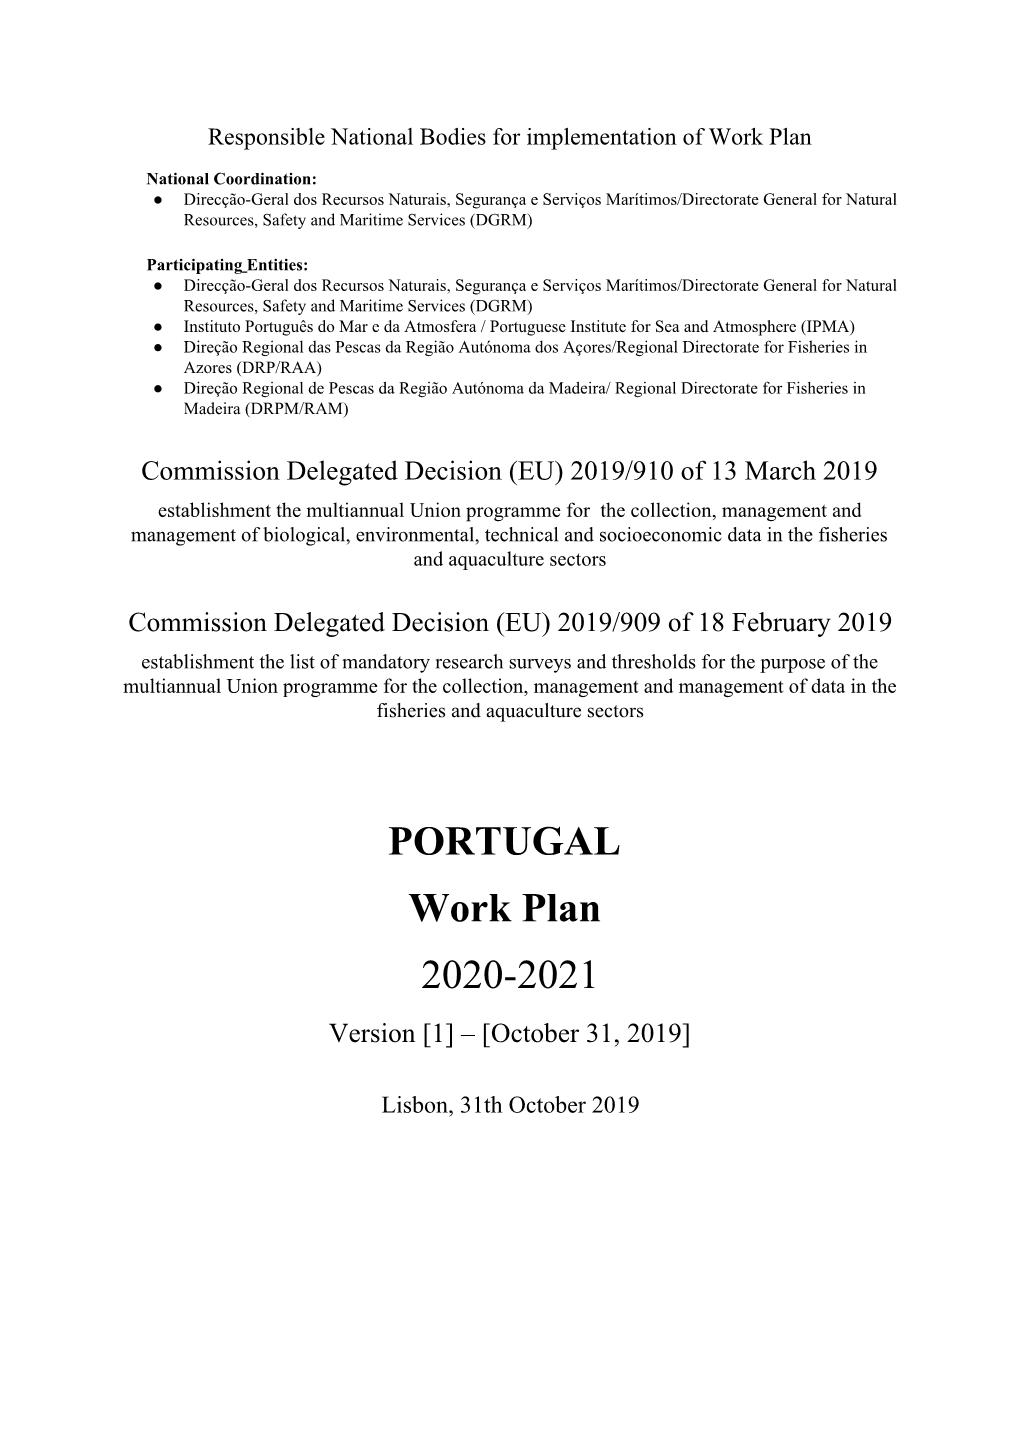 PORTUGAL Work Plan 2020-2021